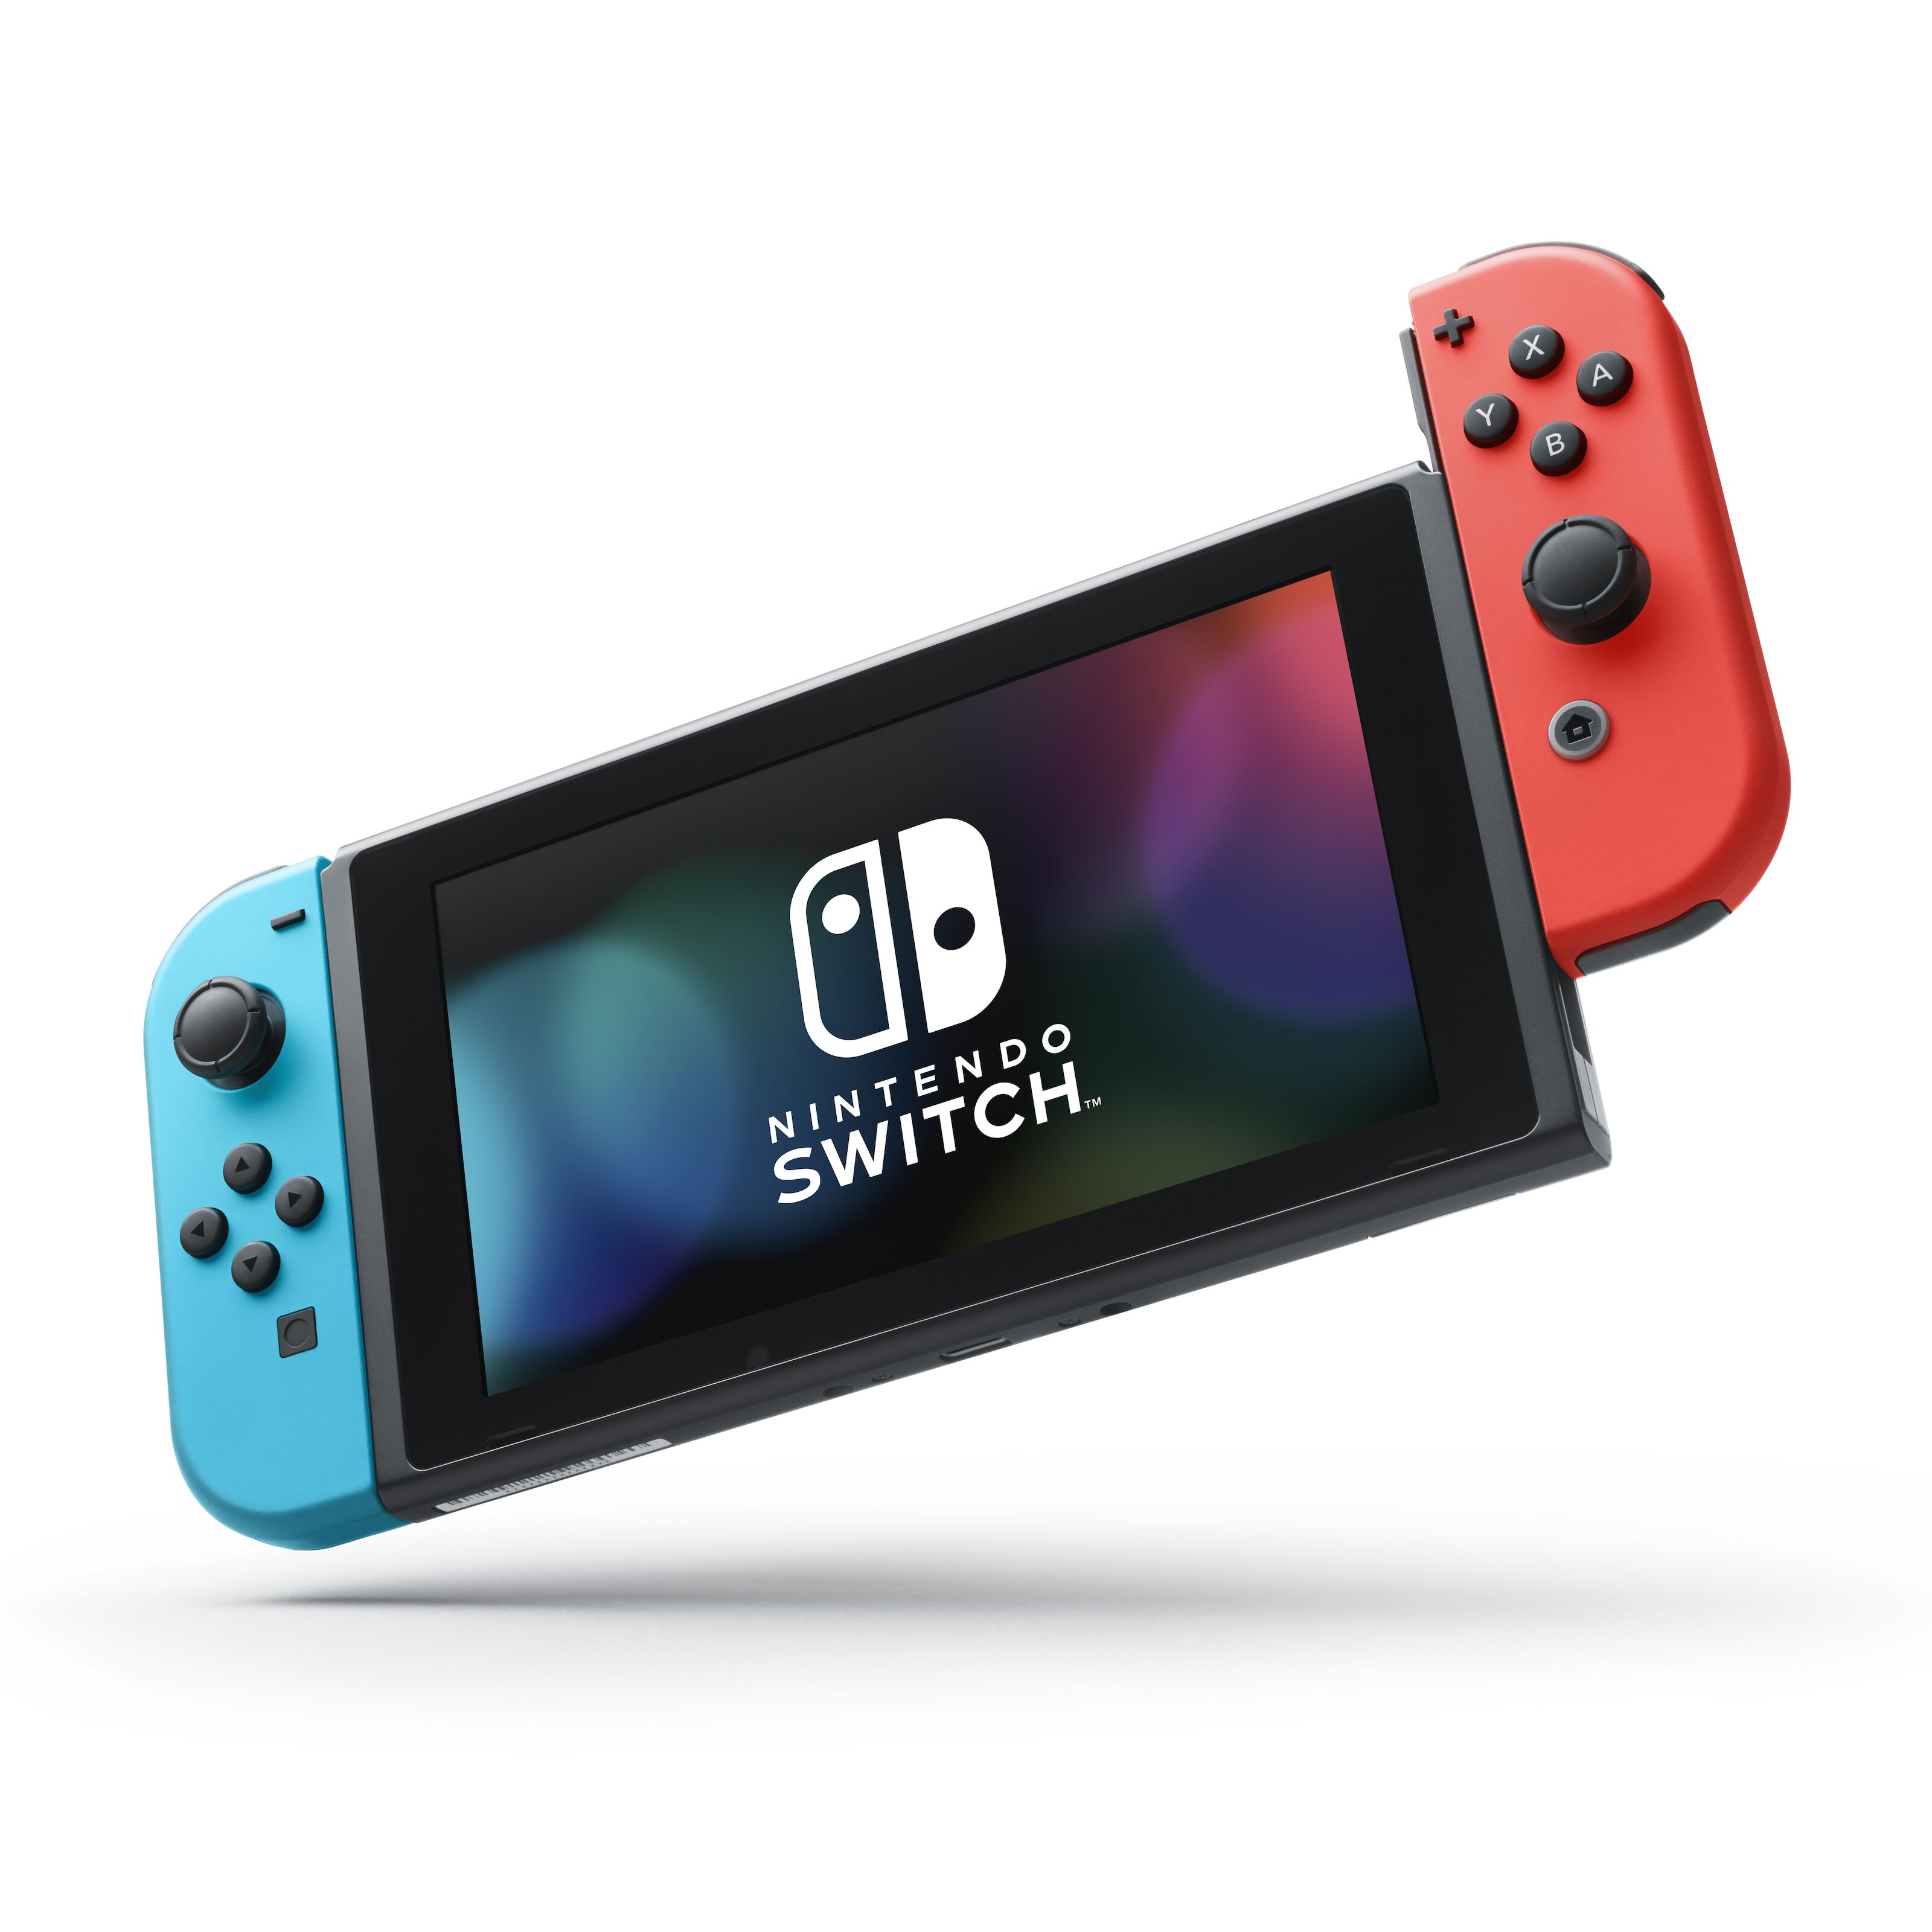 Nintendo Switch (2019) Spillkonsoll 6,2” - Nintendo Switch-konsol |  Kjell.com